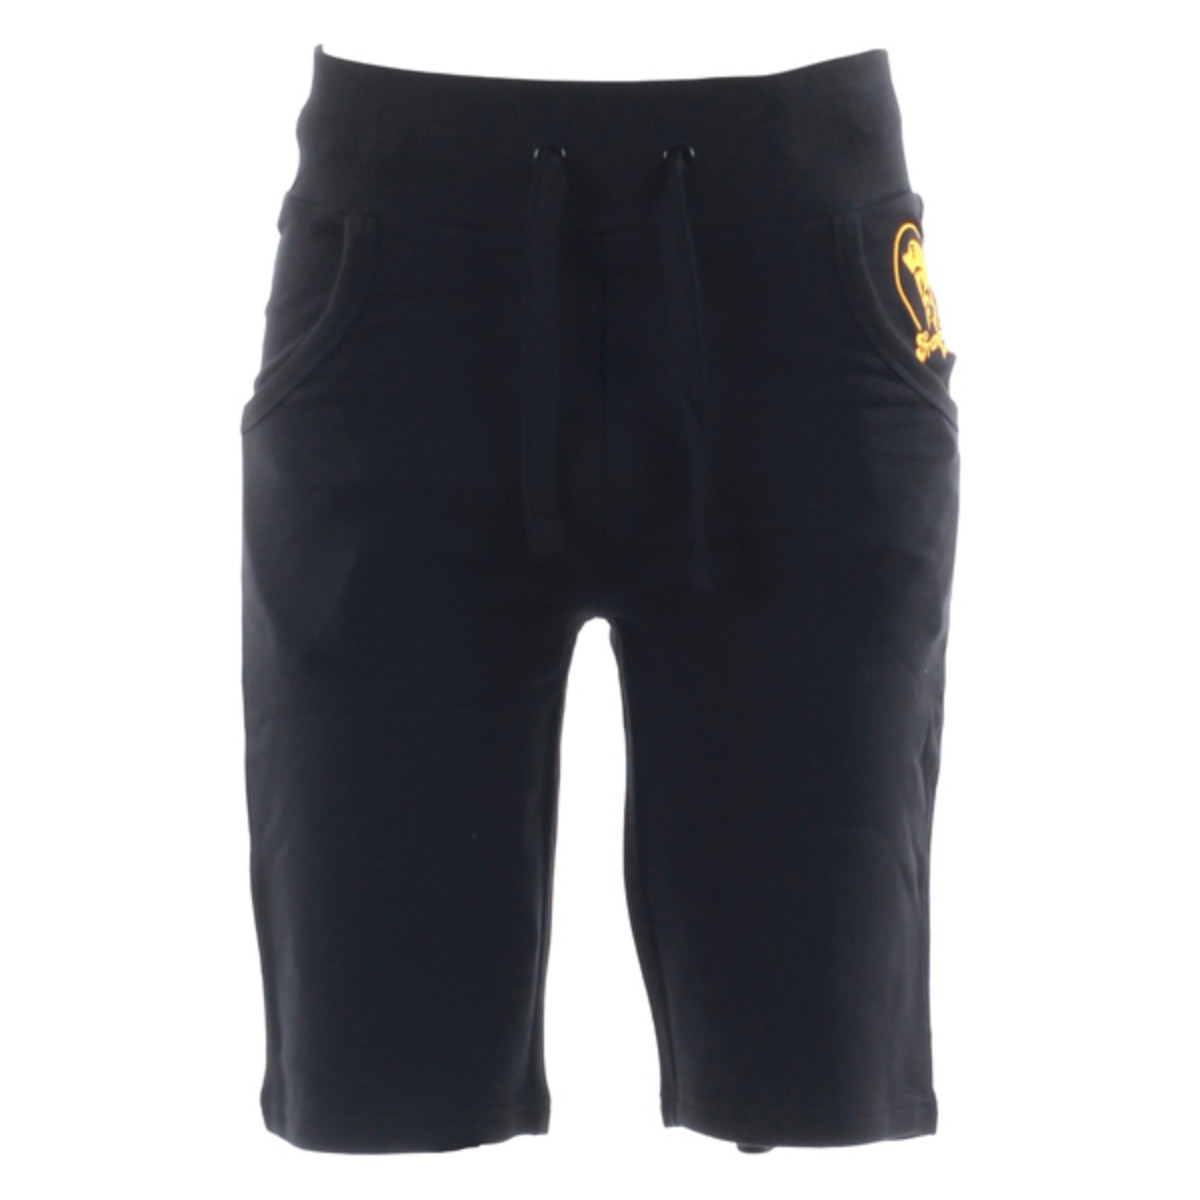 textil Hombre Shorts / Bermudas Frankie Garage FGE02052 Negro